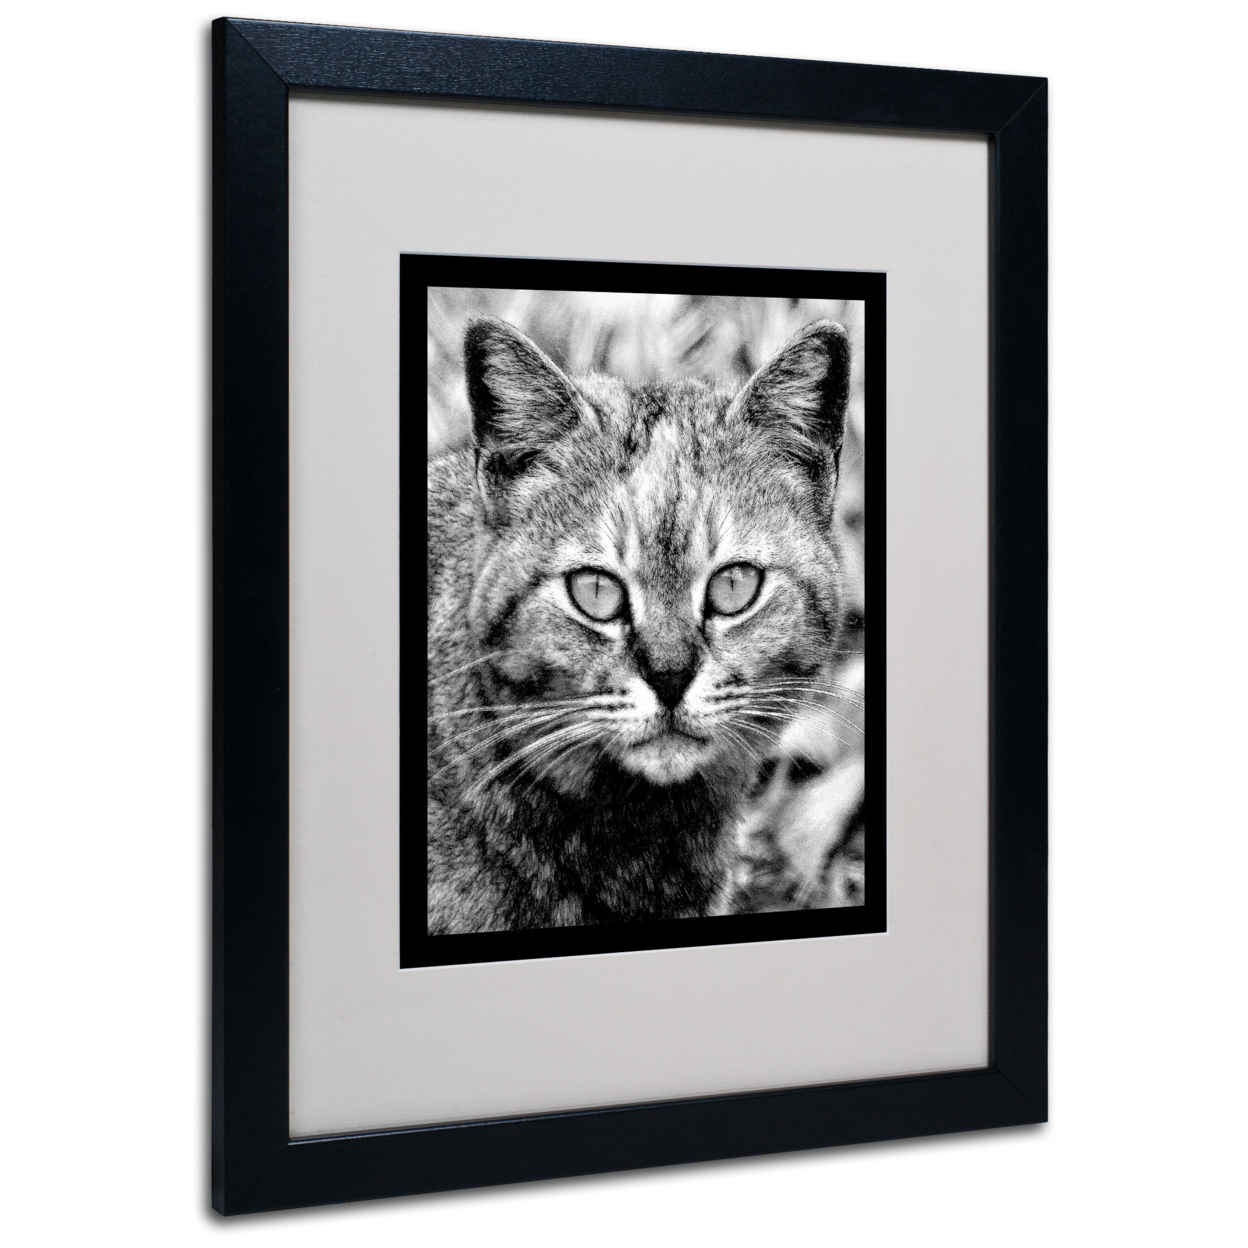 Patty Tuggle 'Black & White Pretty Kitty' Black Wooden Framed Art 18 X 22 Inches